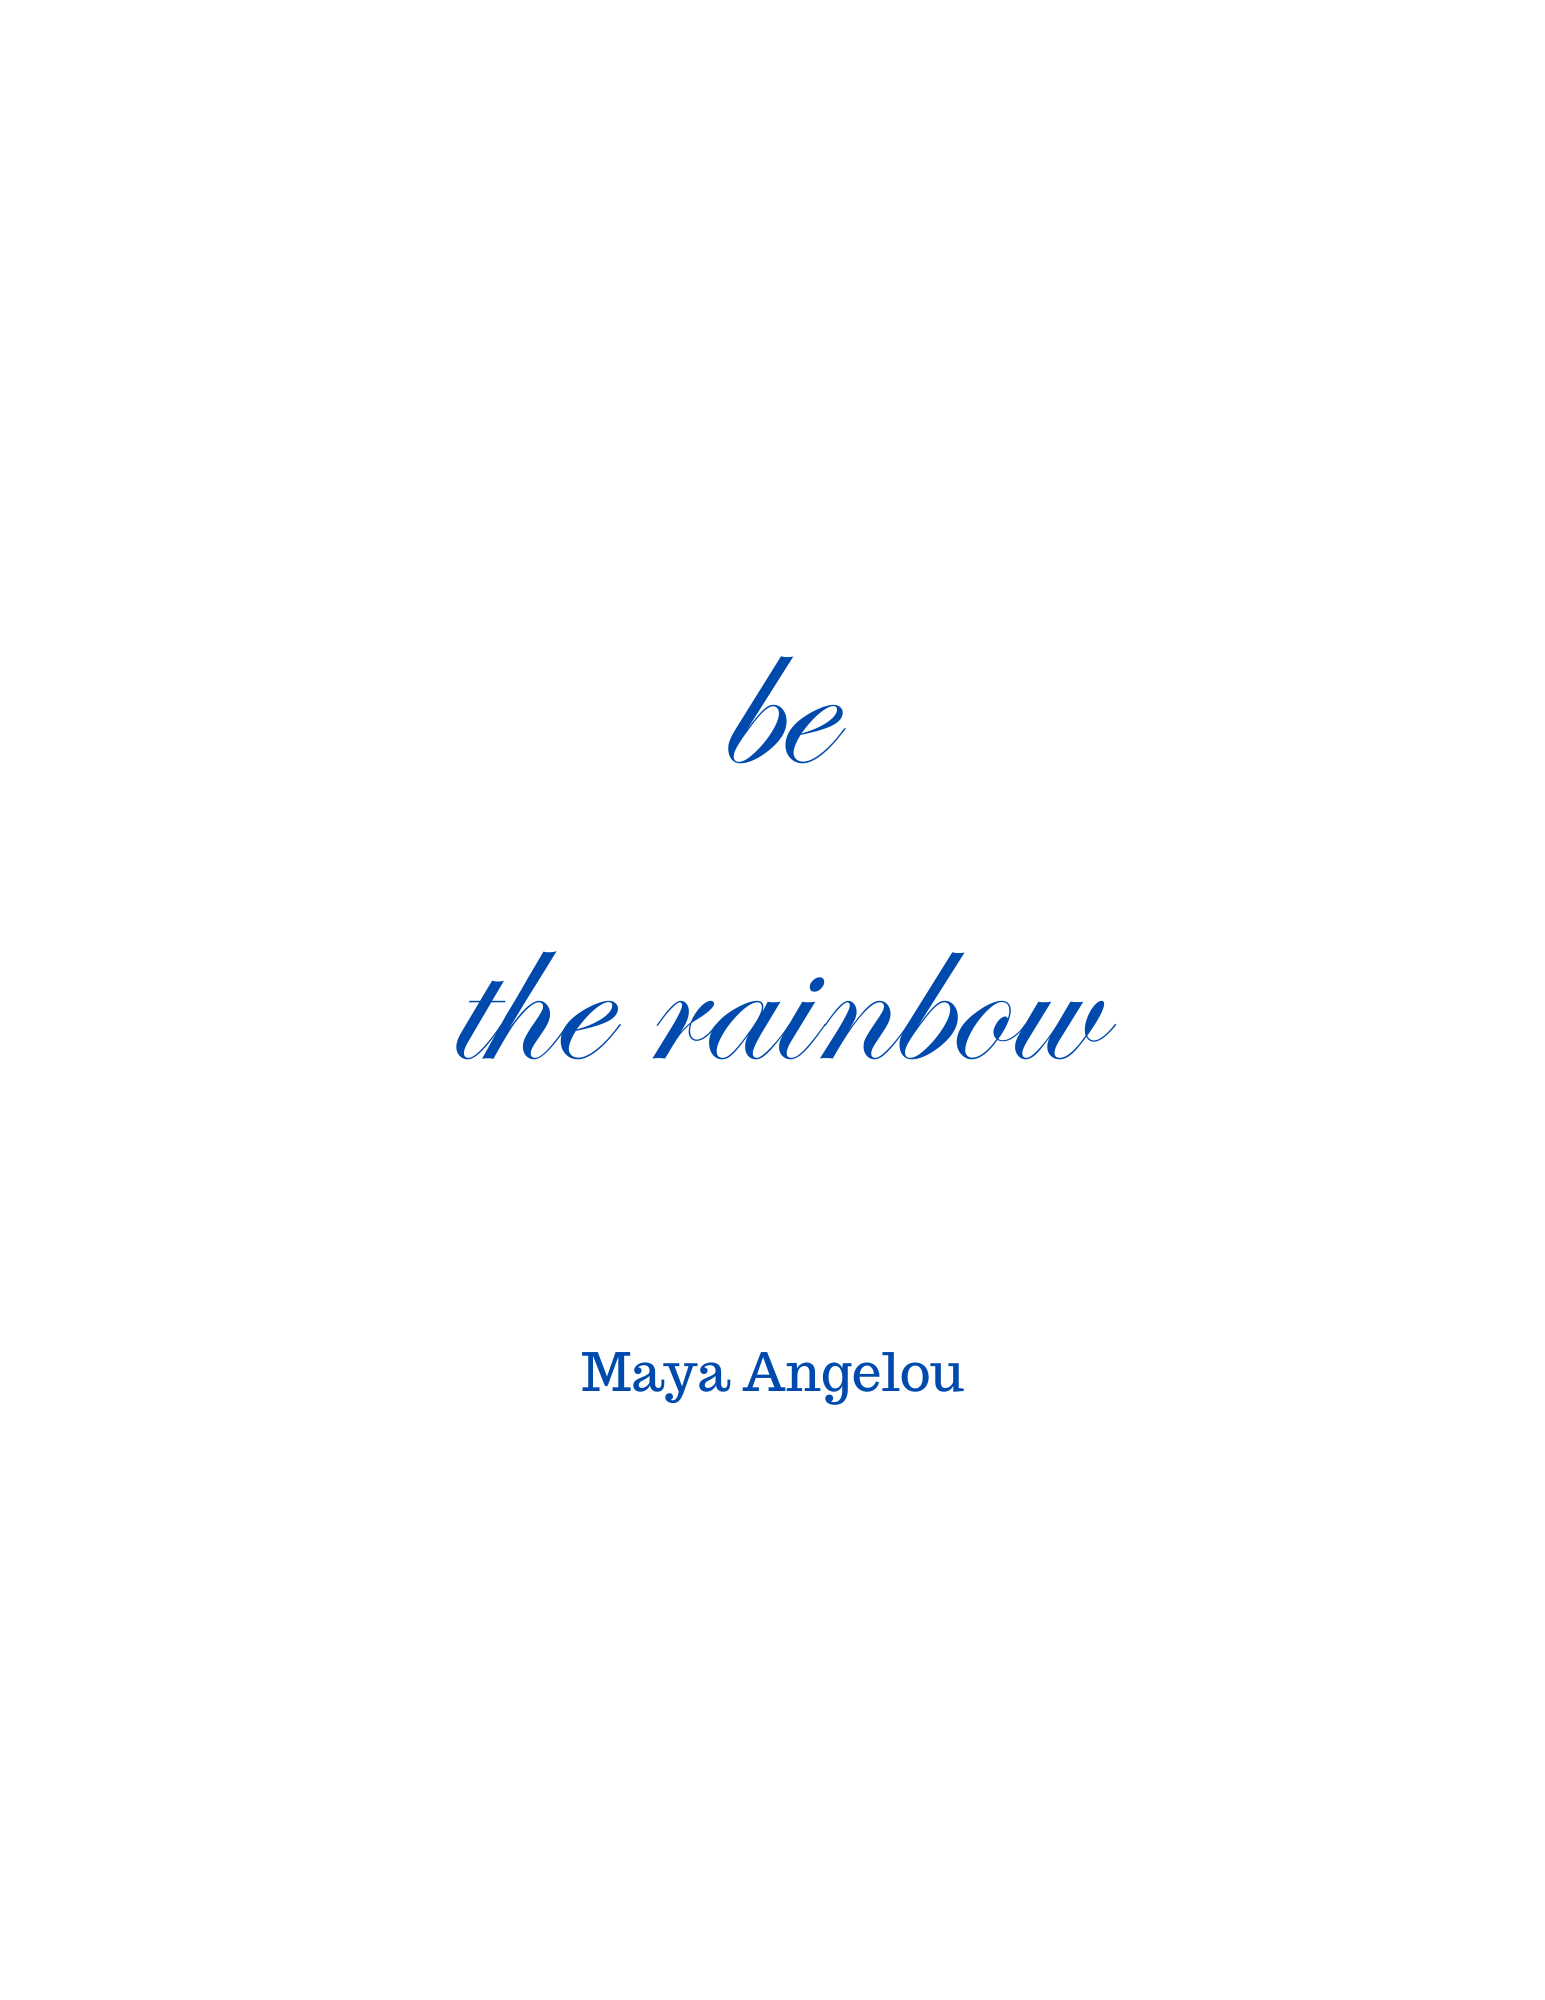 Be the rainbow - Maya Angelou